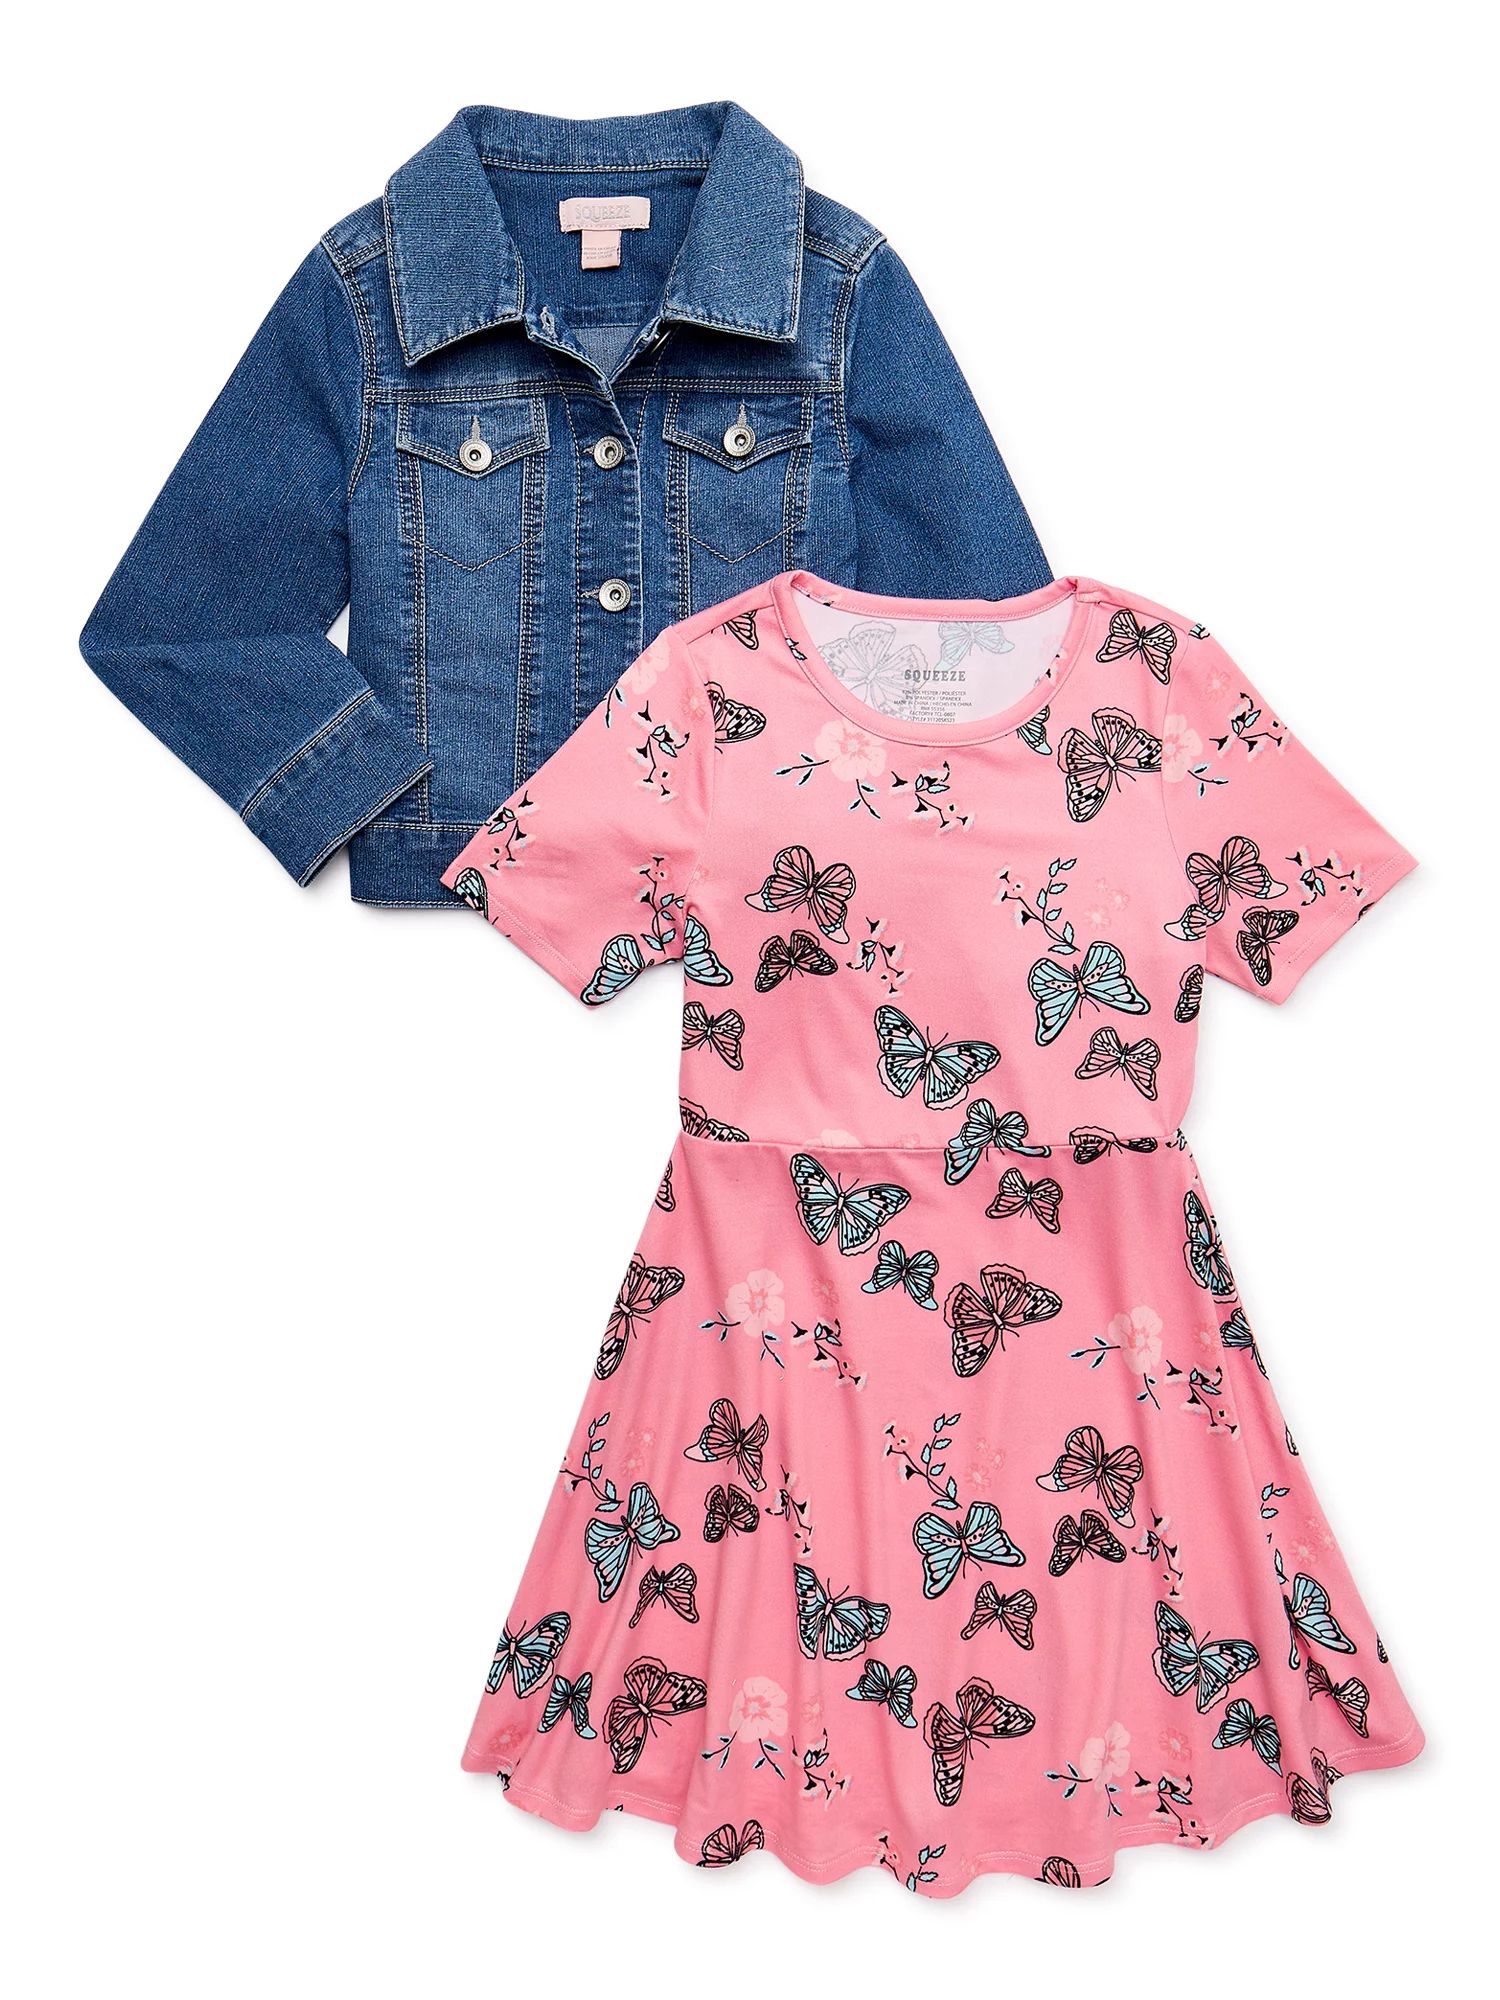 Squeeze Girls Printed Dress with Denim Jacket, Sizes 4-12 | Walmart (US)